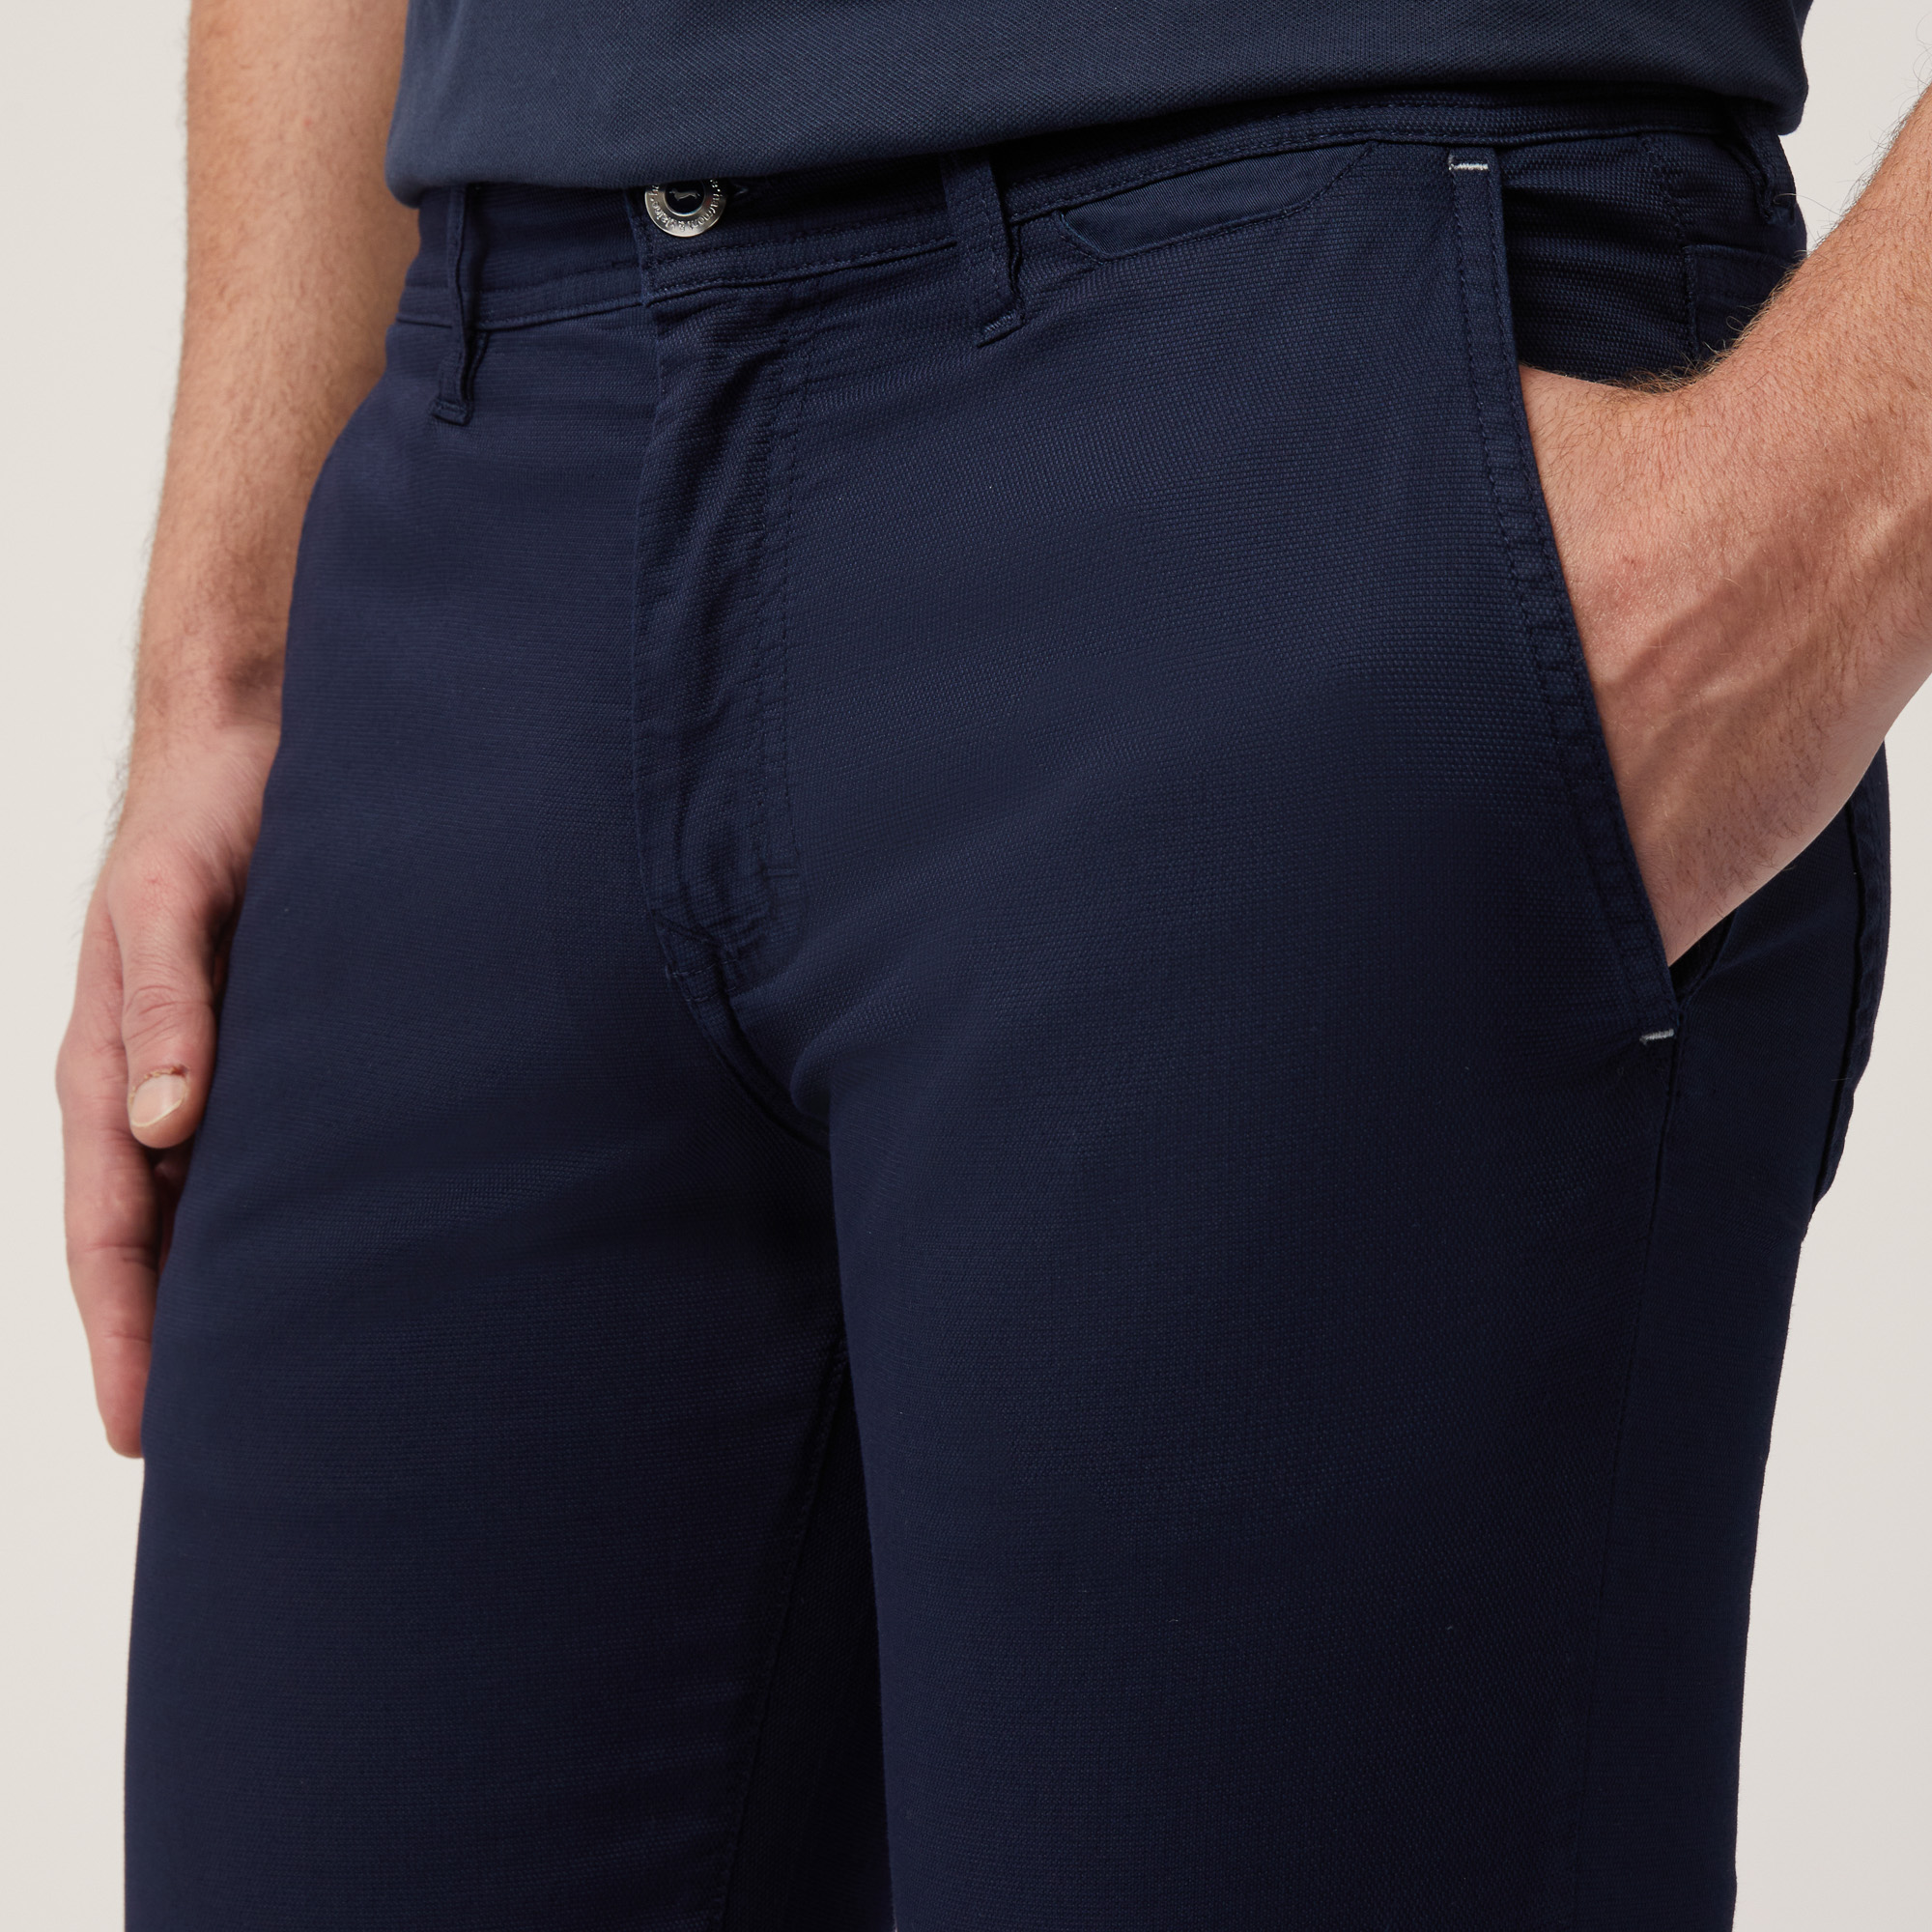 Colorfive Pants, Blue, large image number 2